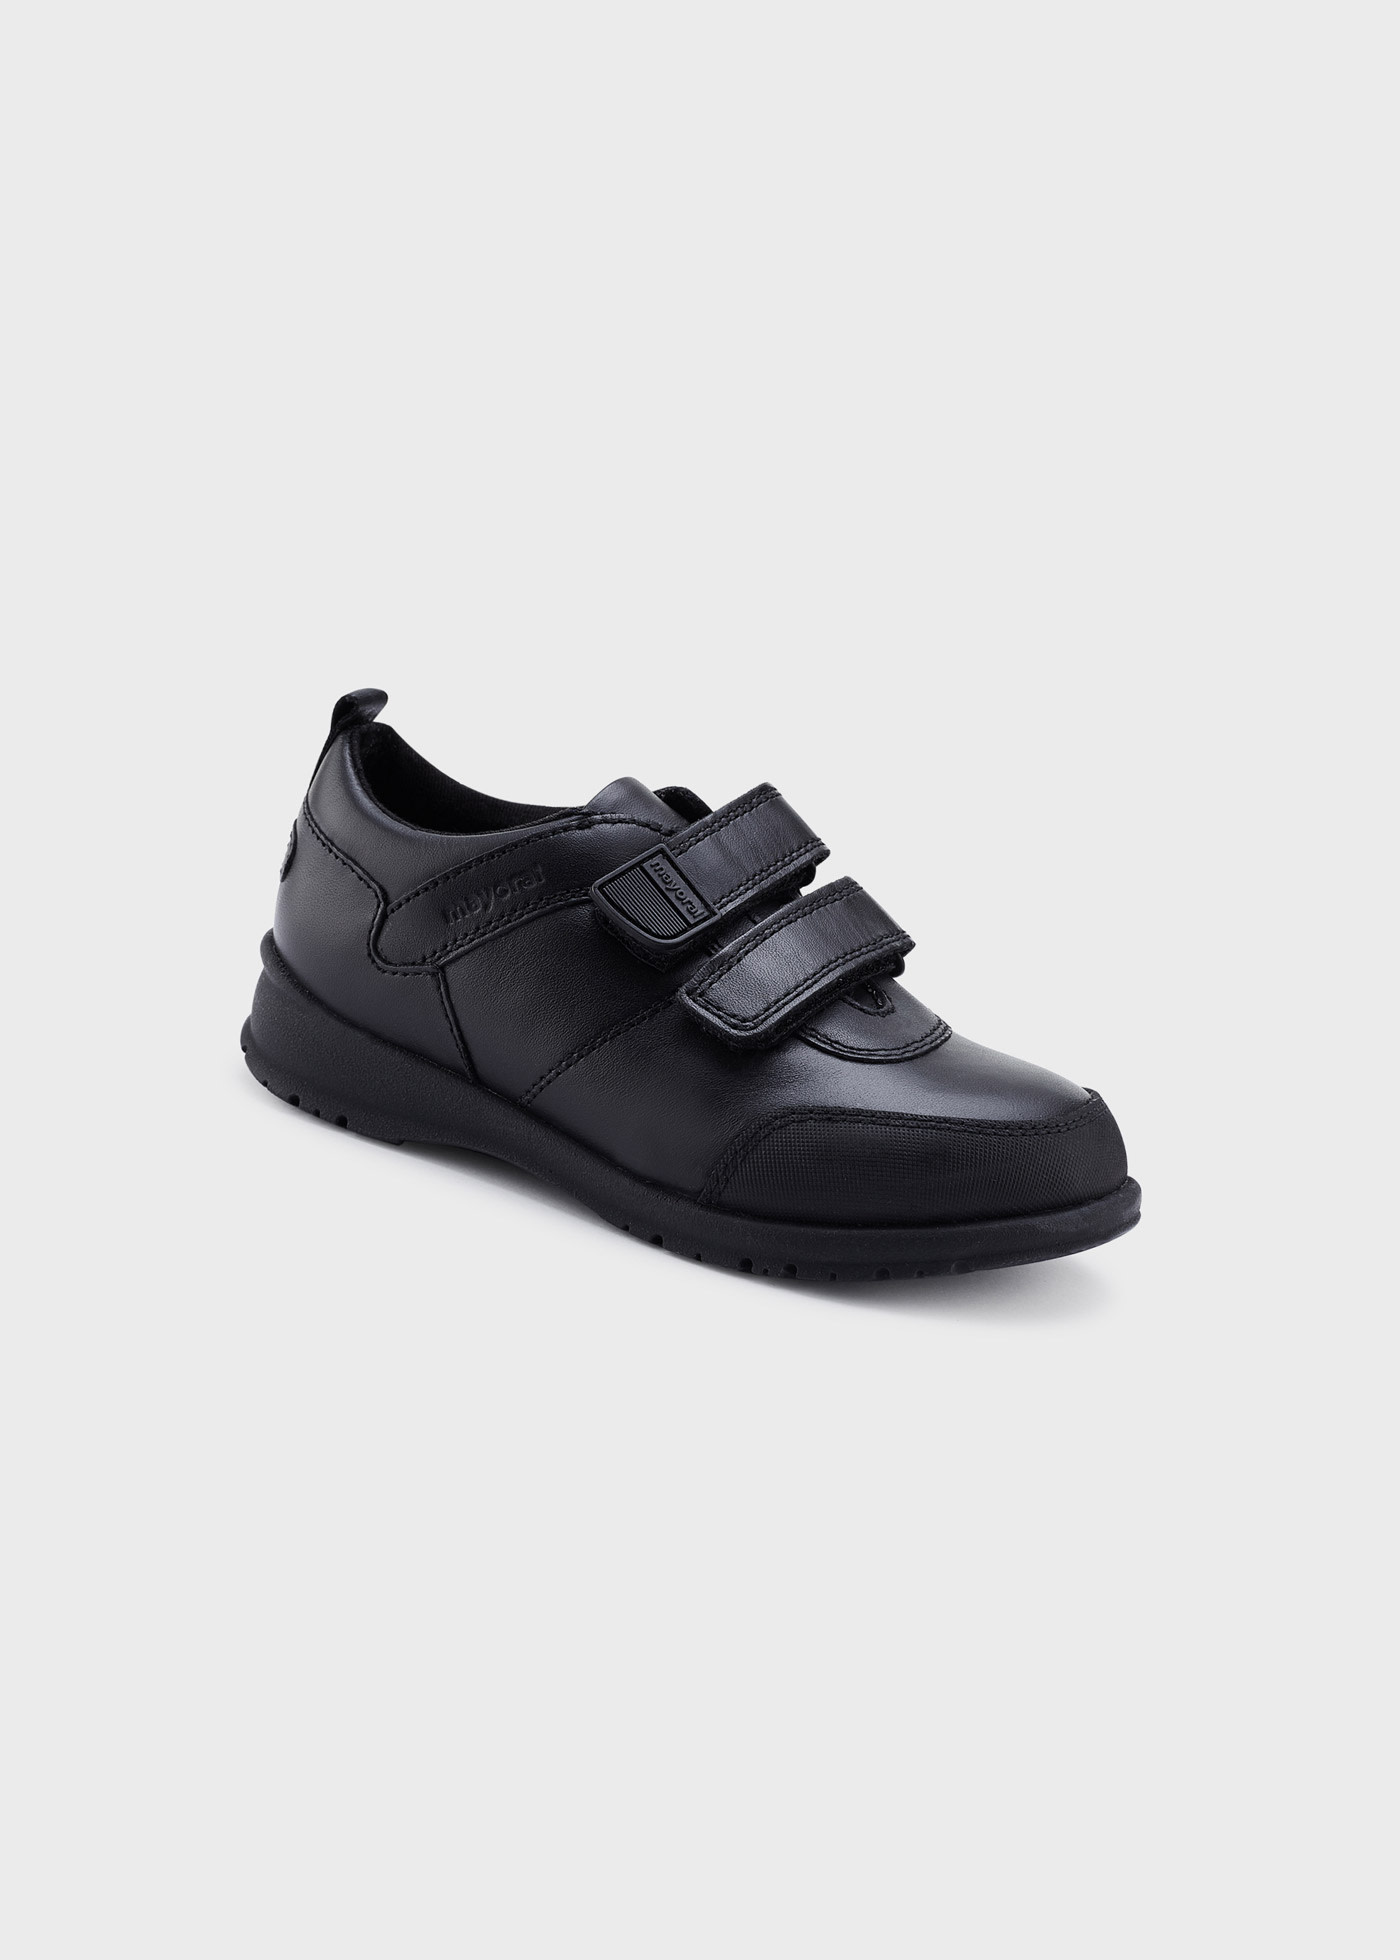 Leather school shoes boy